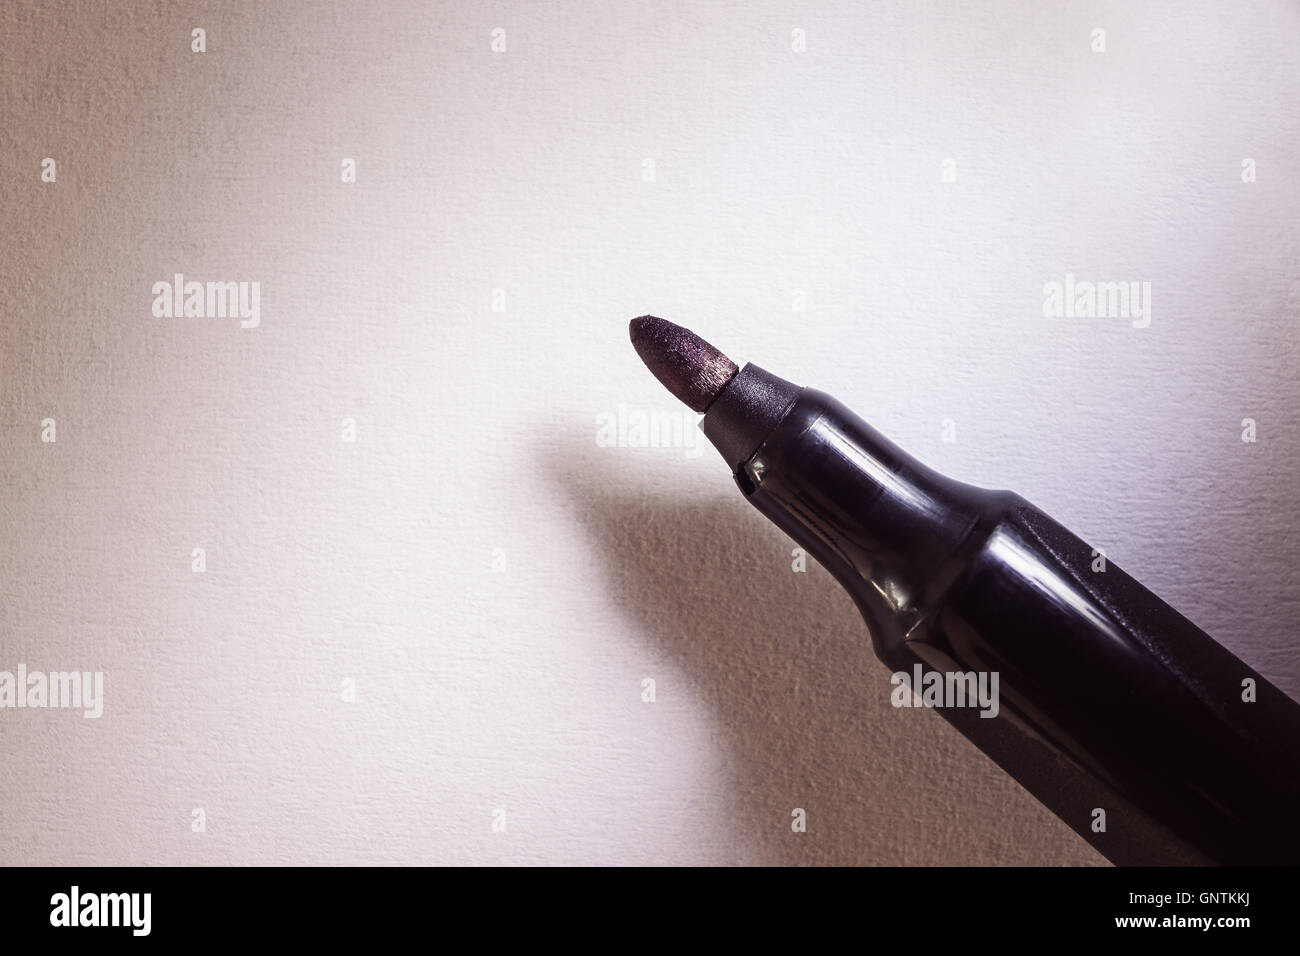 Closeup view of a black felt-tip pen on white paper. Stock Photo